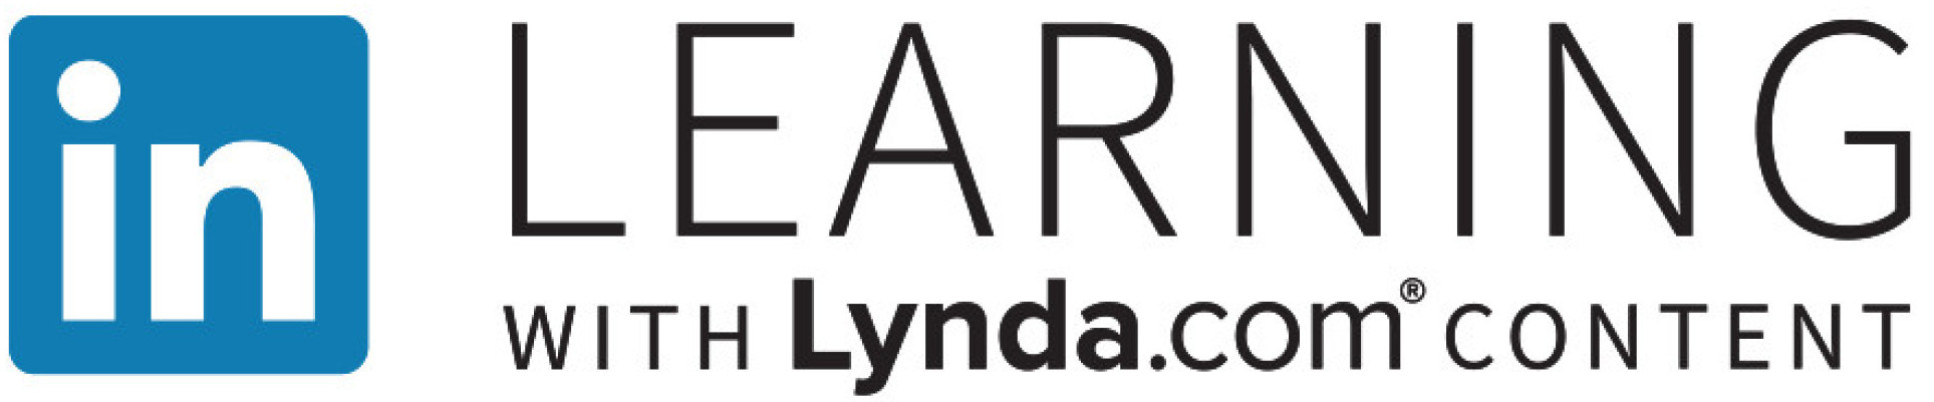 LinkedIn Learning with Lynda.com 